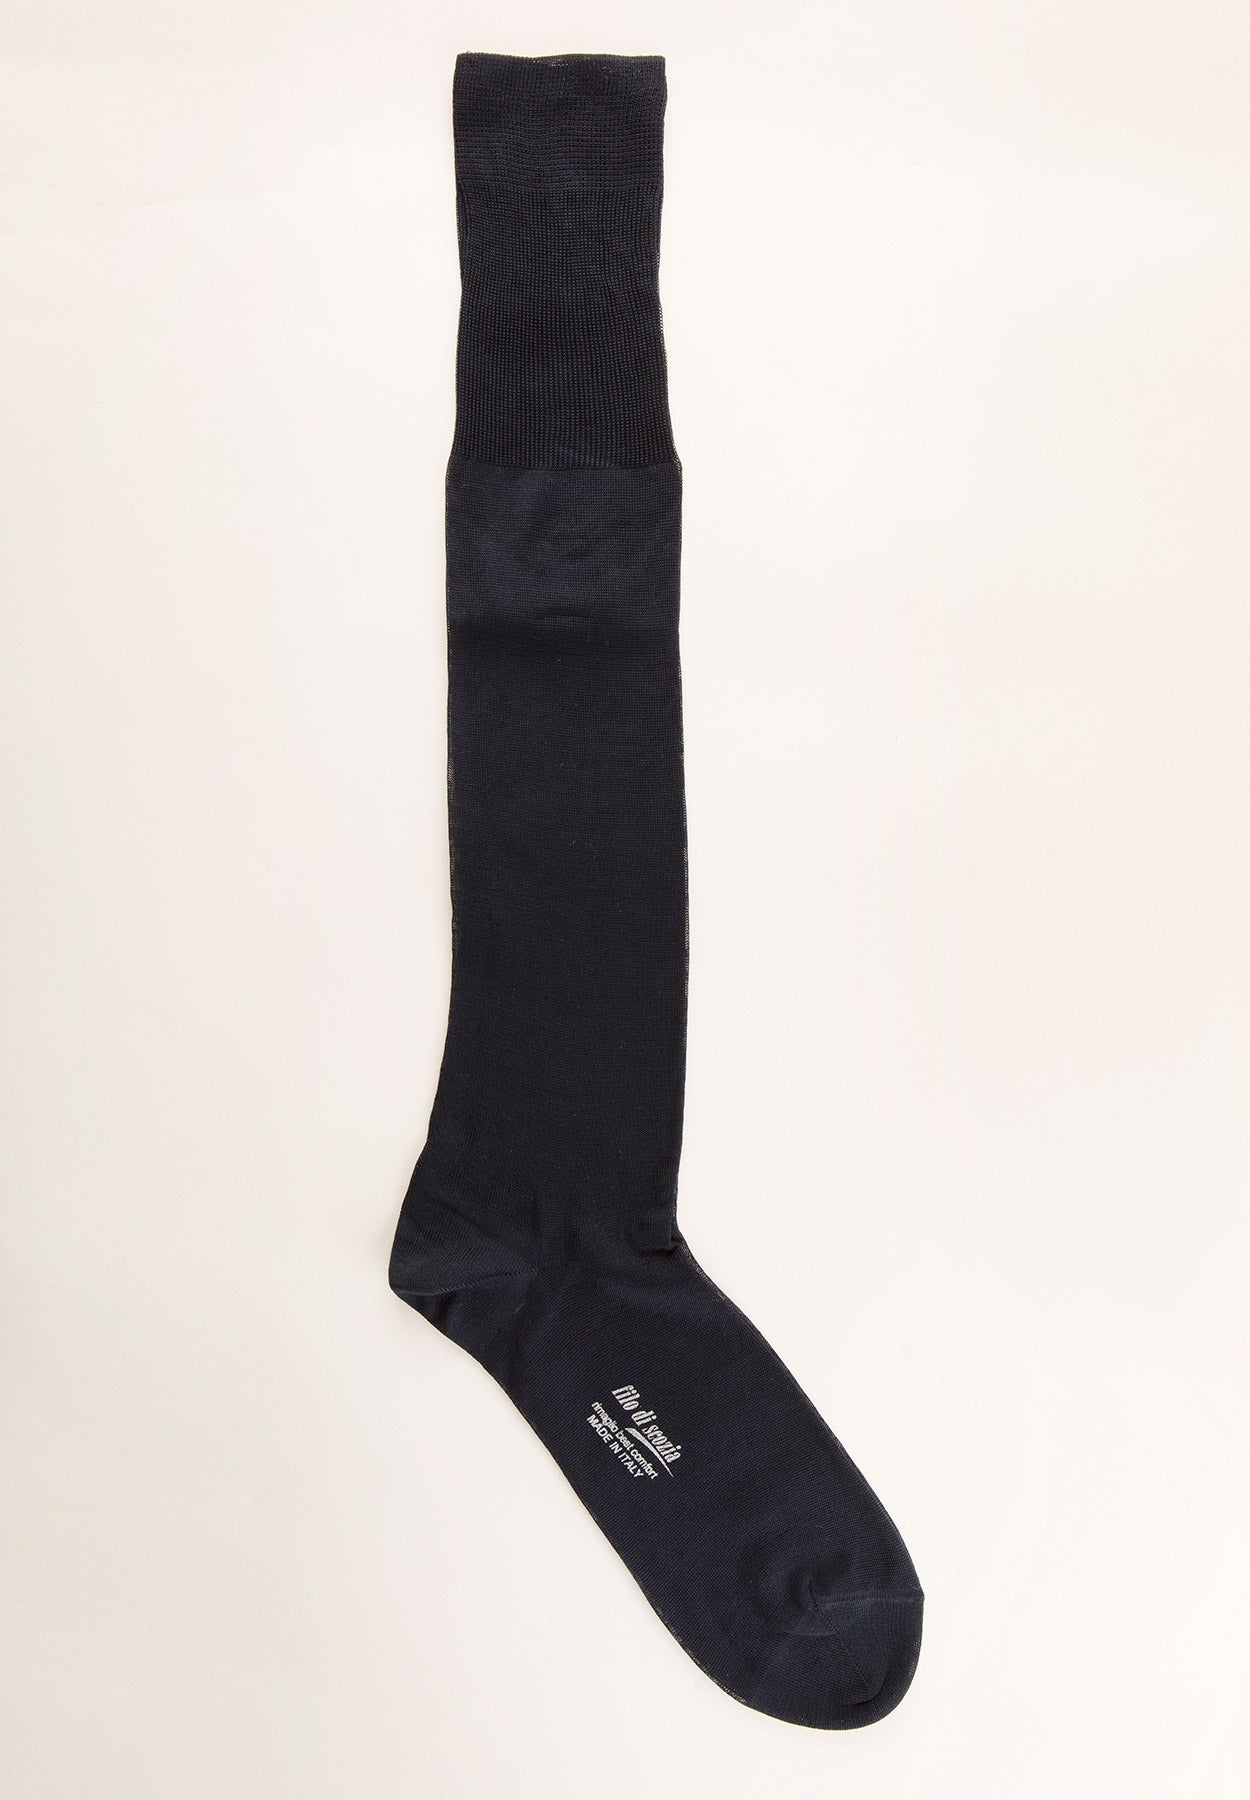 Navy blue lisle long stockings